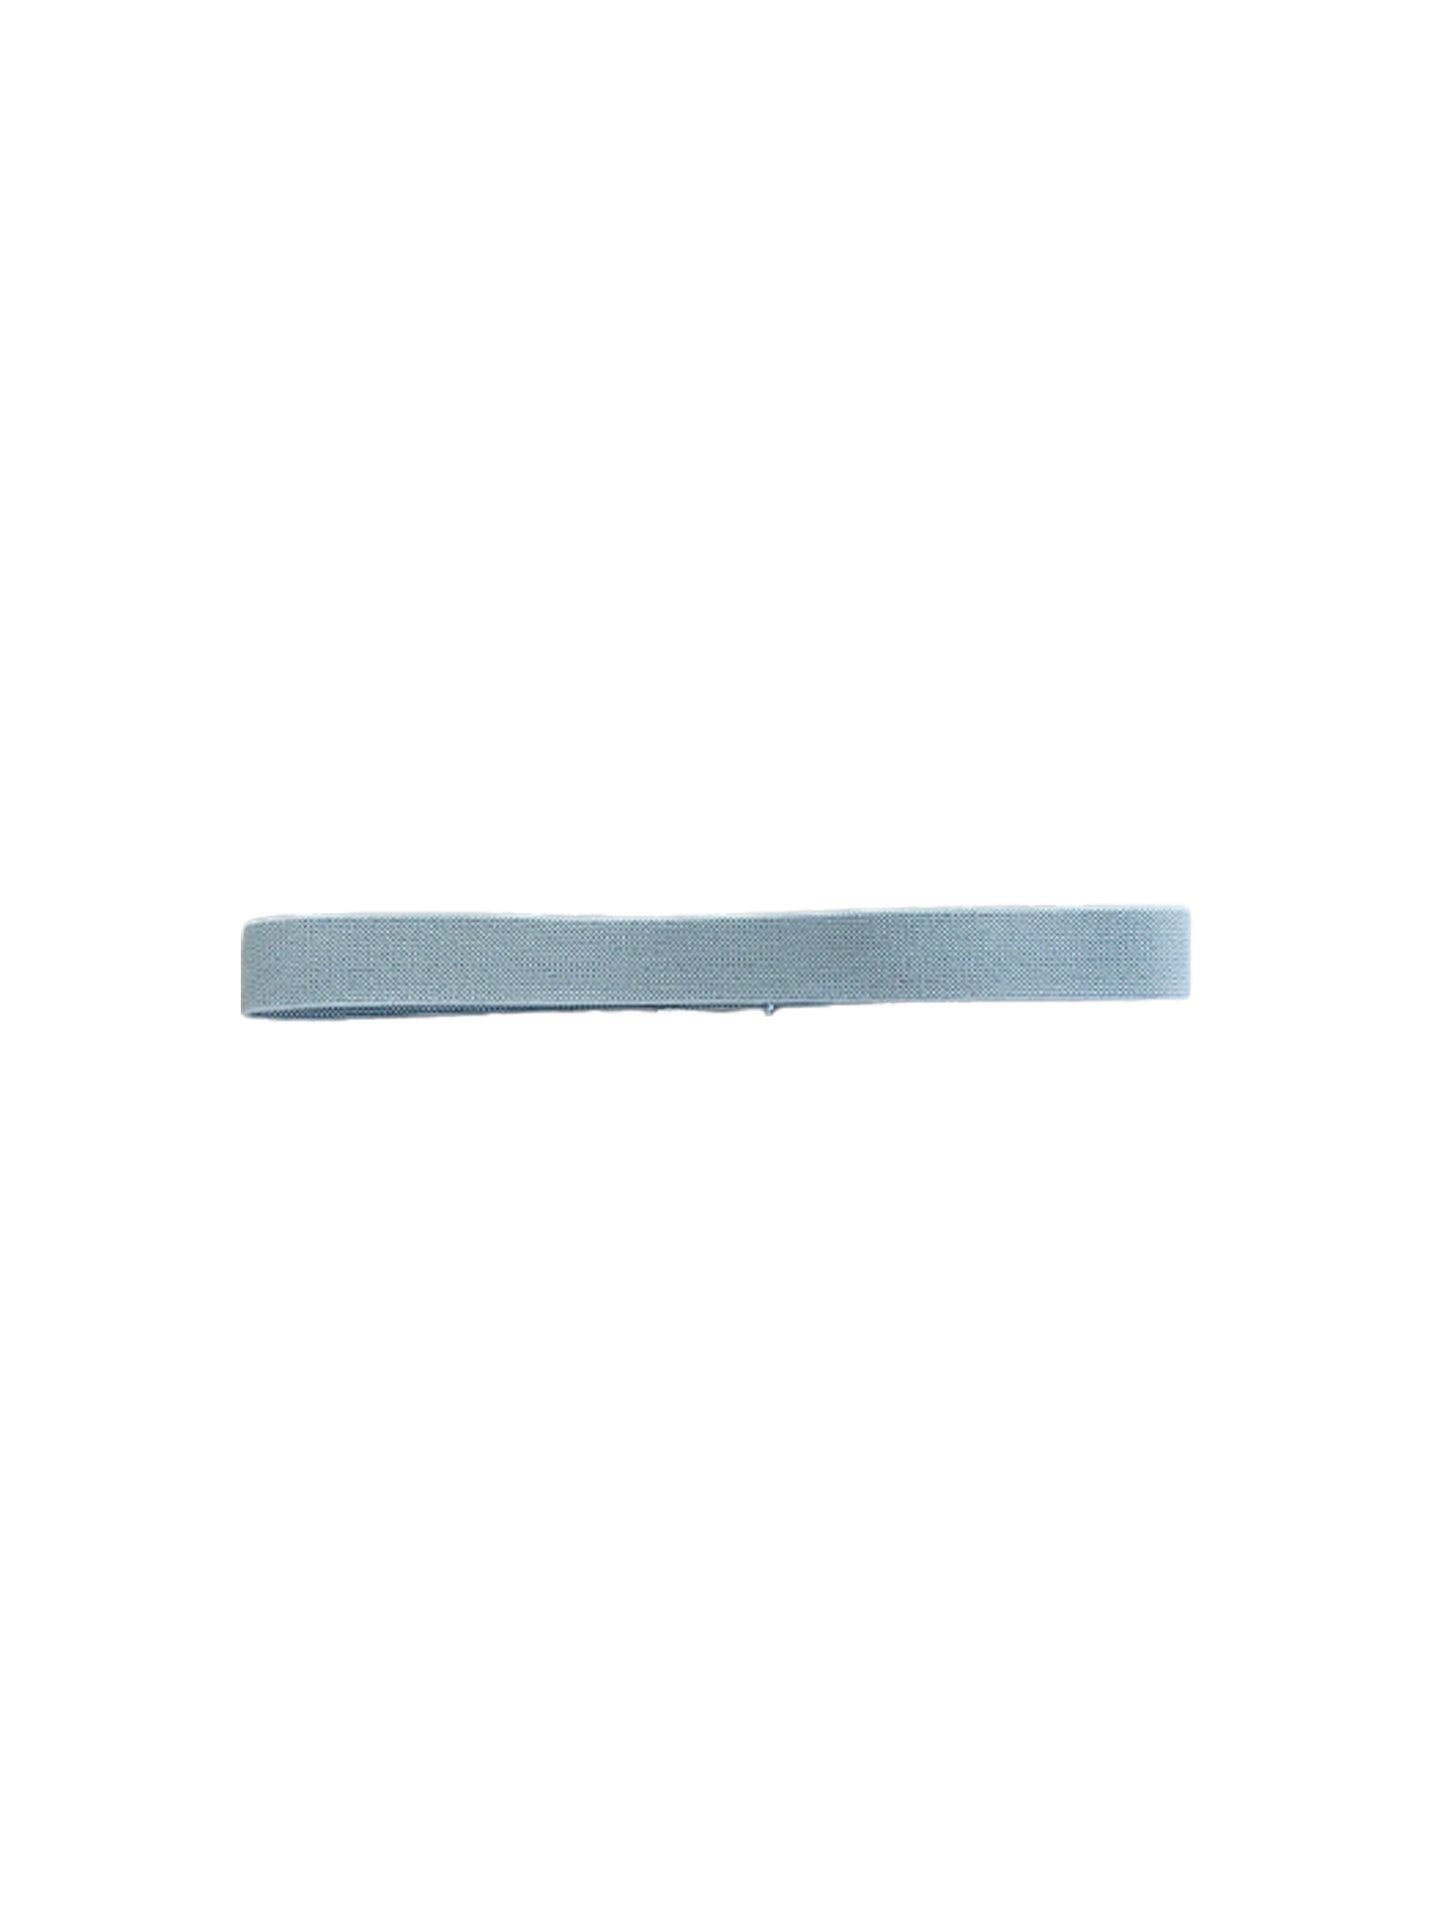 elastic hat band 1 inch gray